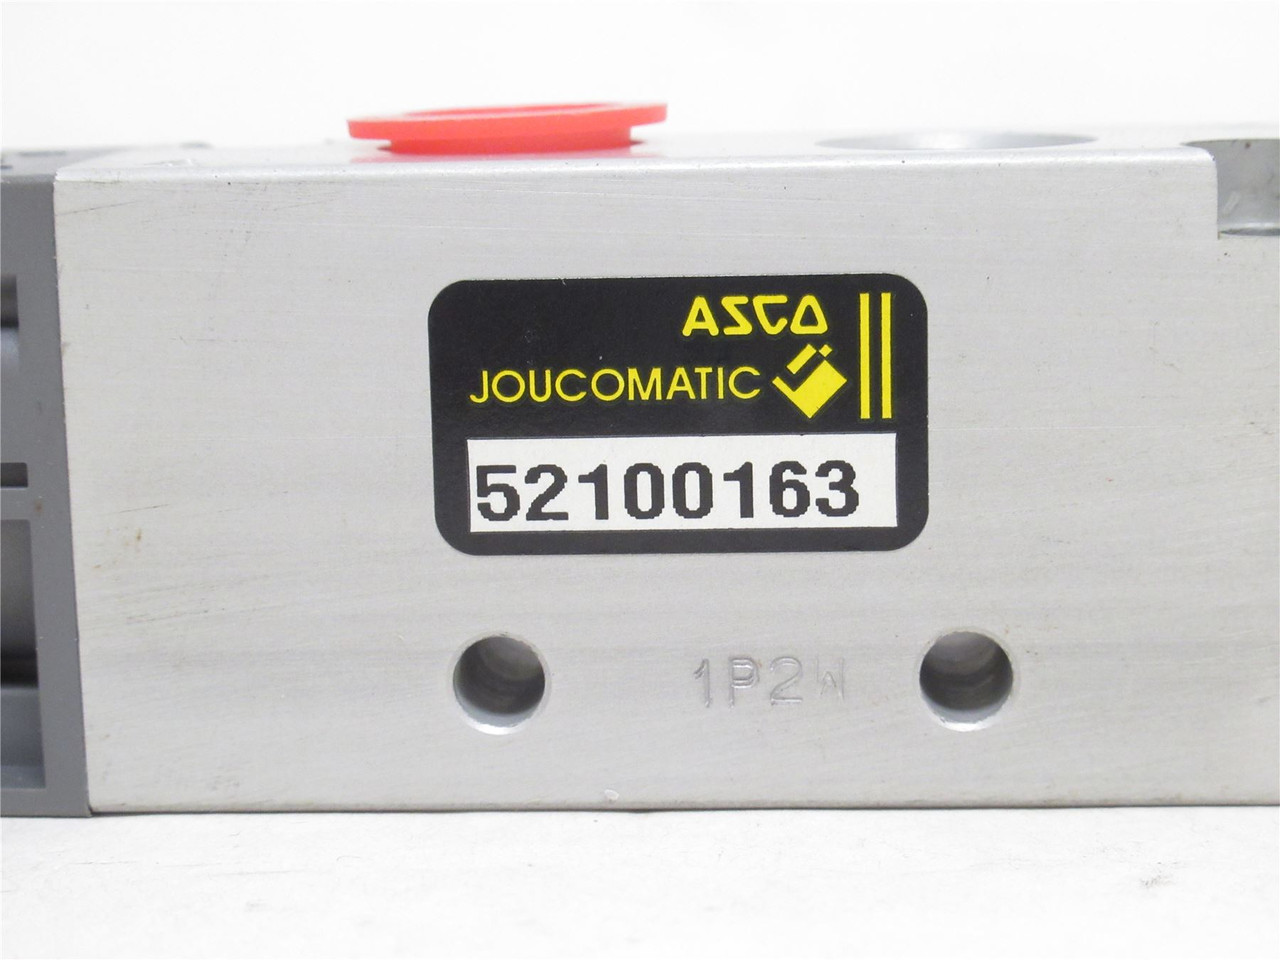 Asco 52100163; Solenoid Air Valve; 5/2; G1/4" Port Size